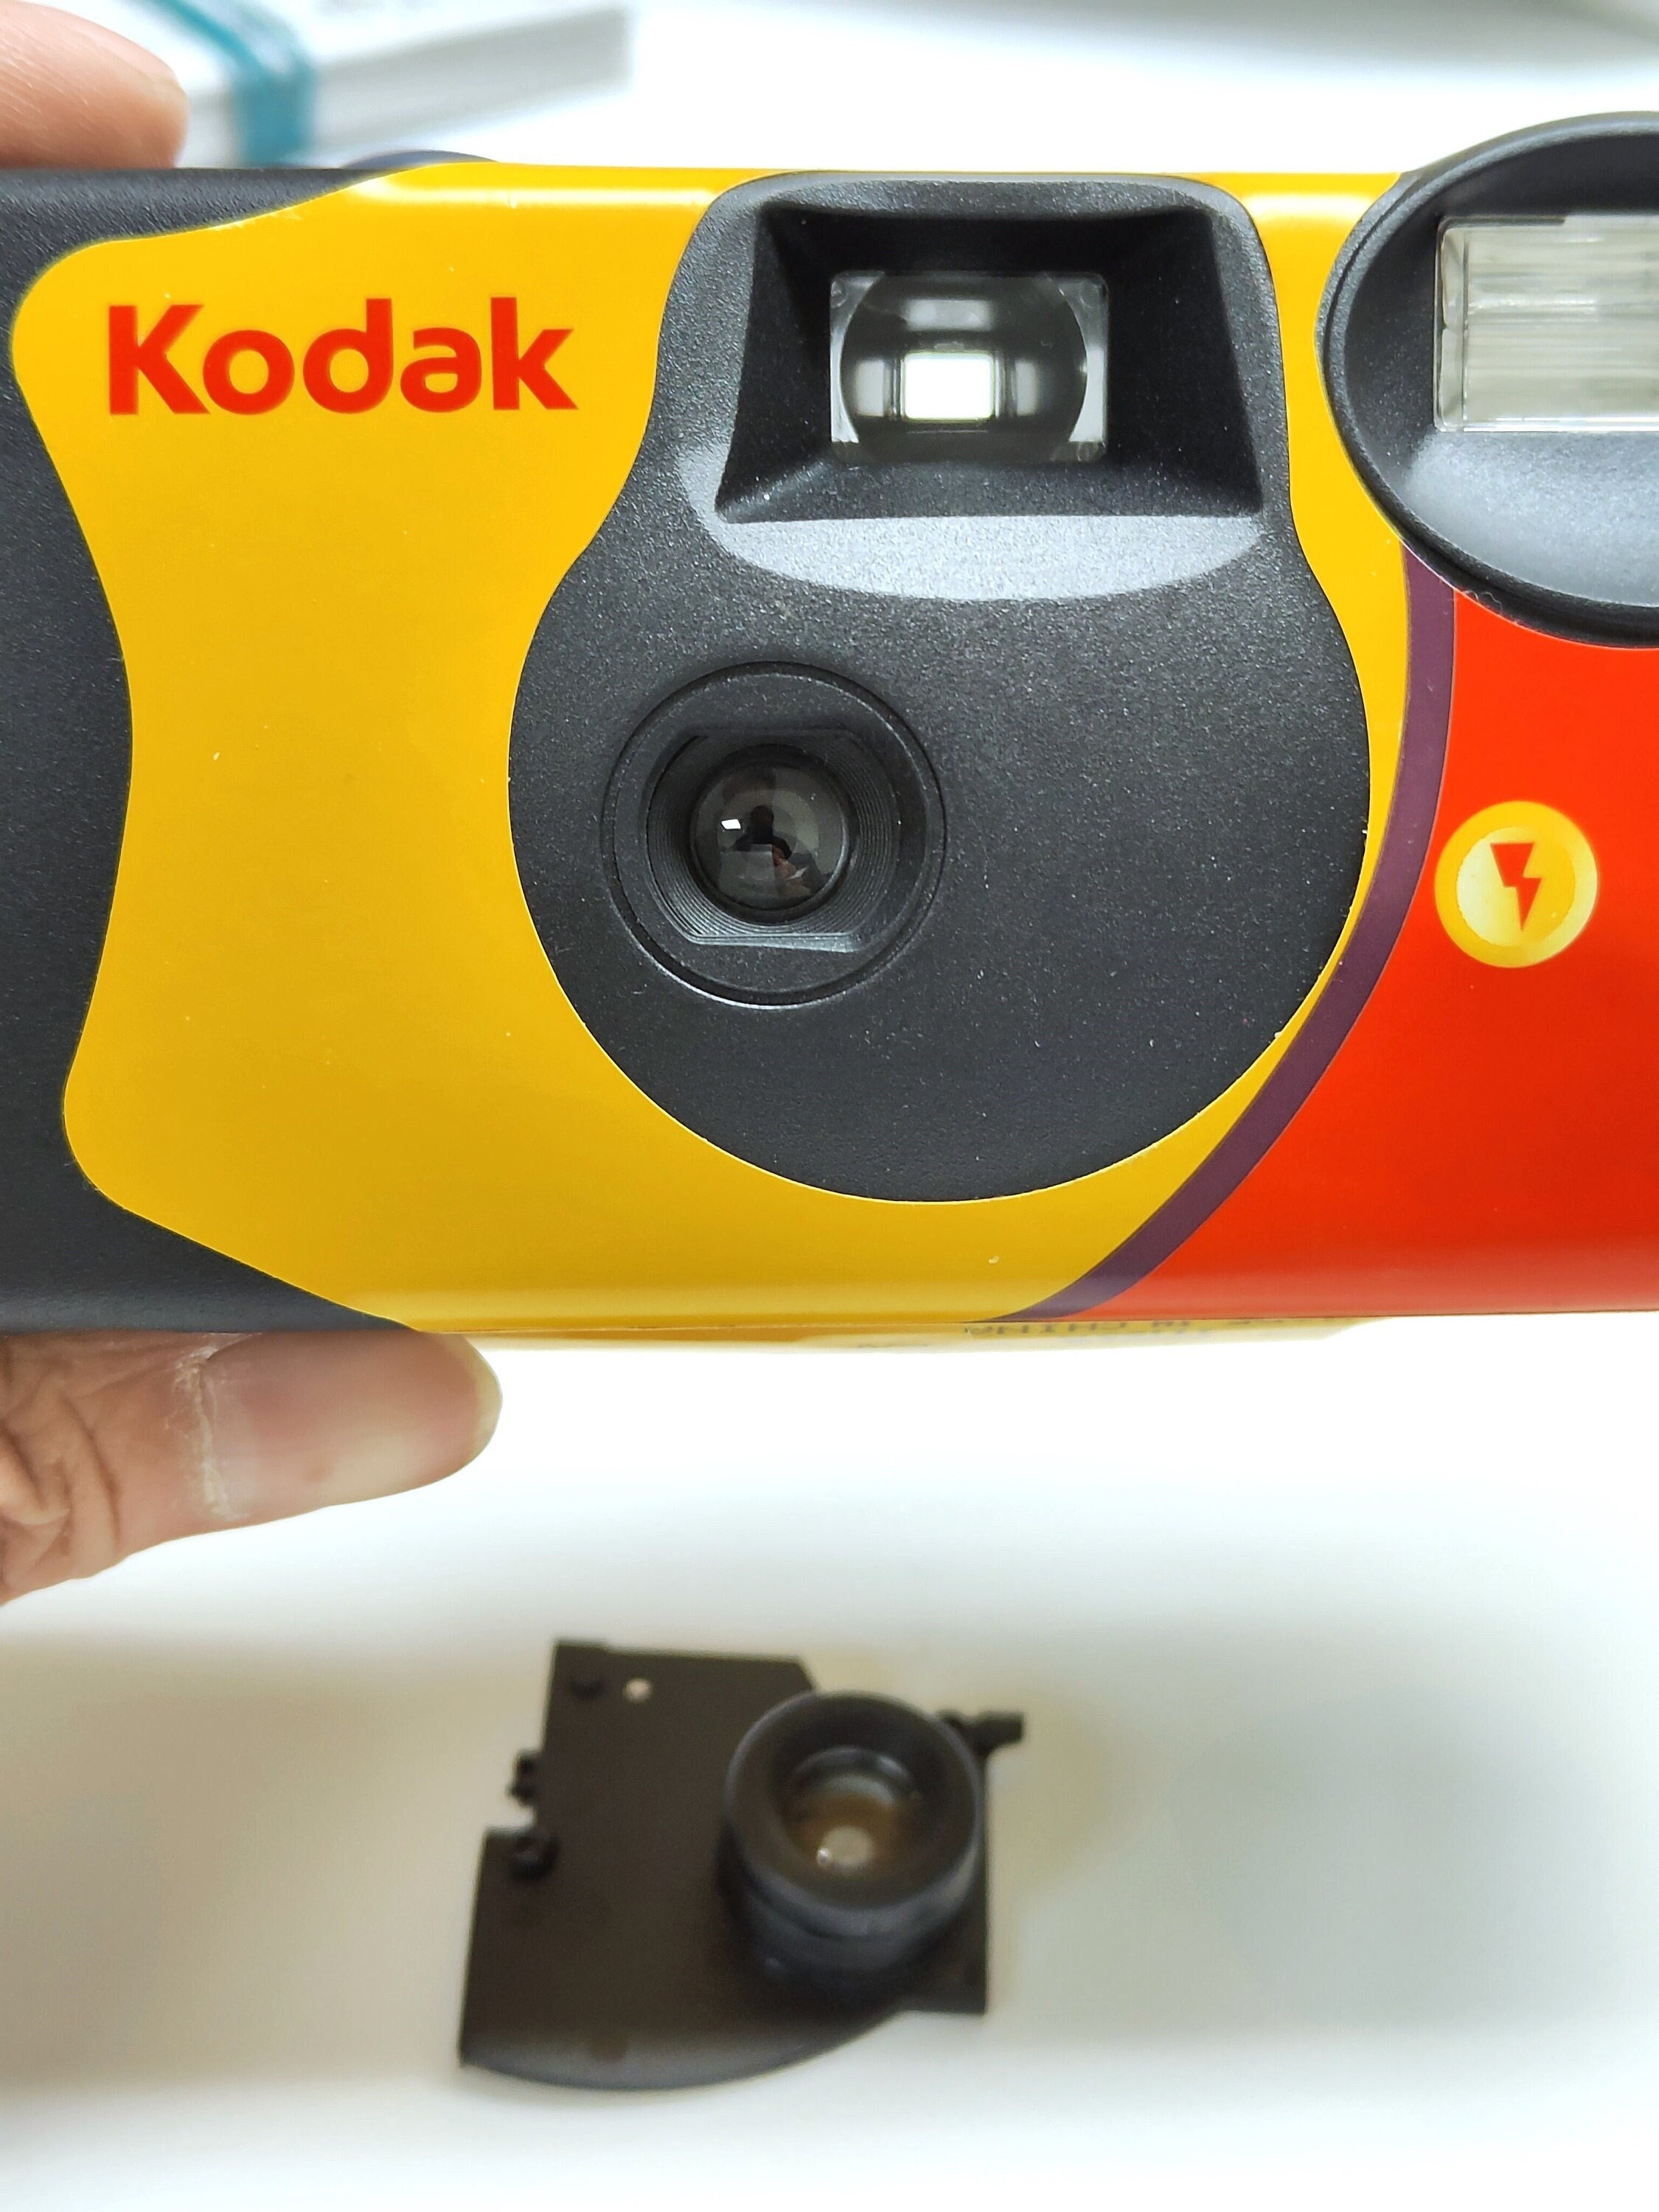 Kodak FunSaver Disposable Camera  Disposable camera, Single use camera,  Photography gear accessories